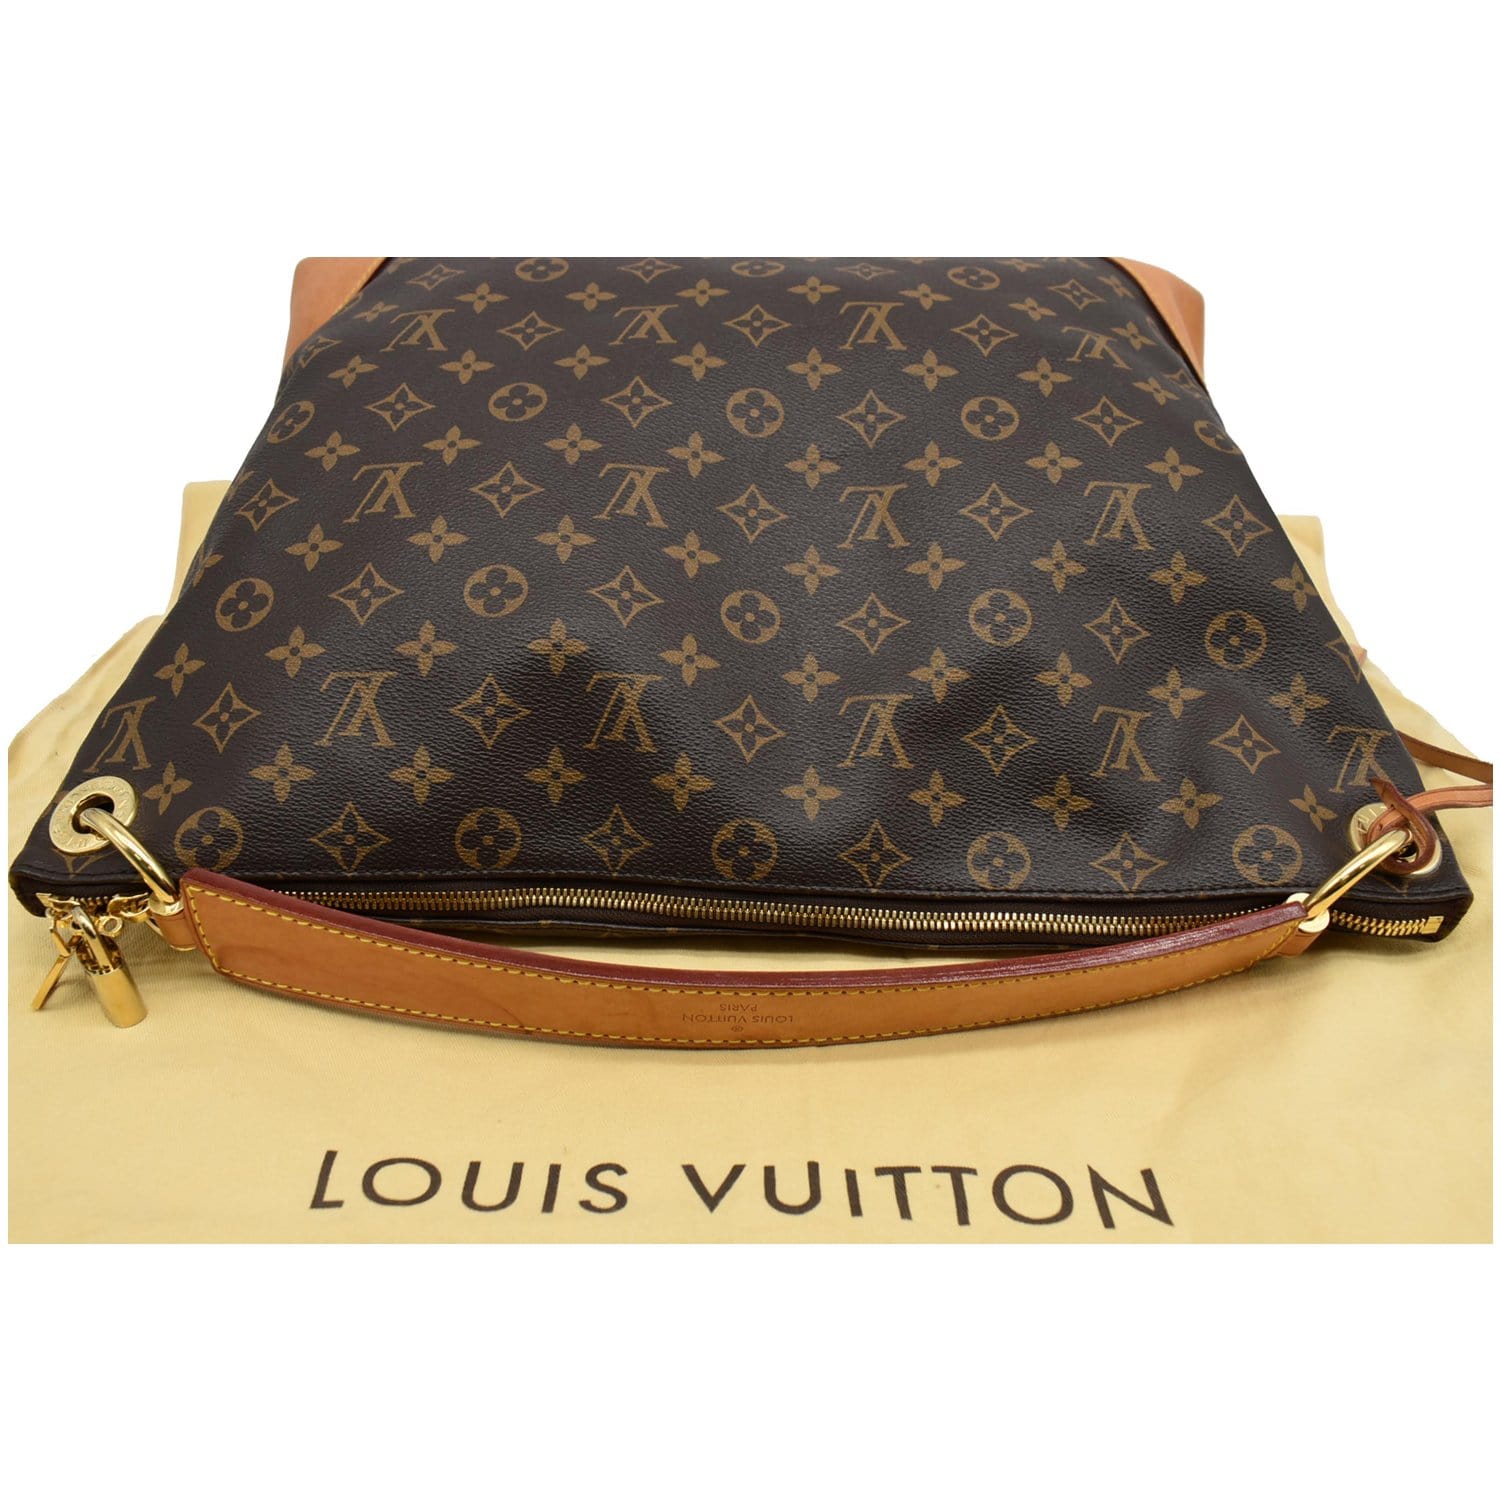 Berri Mm Louis Vuitton - For Sale on 1stDibs